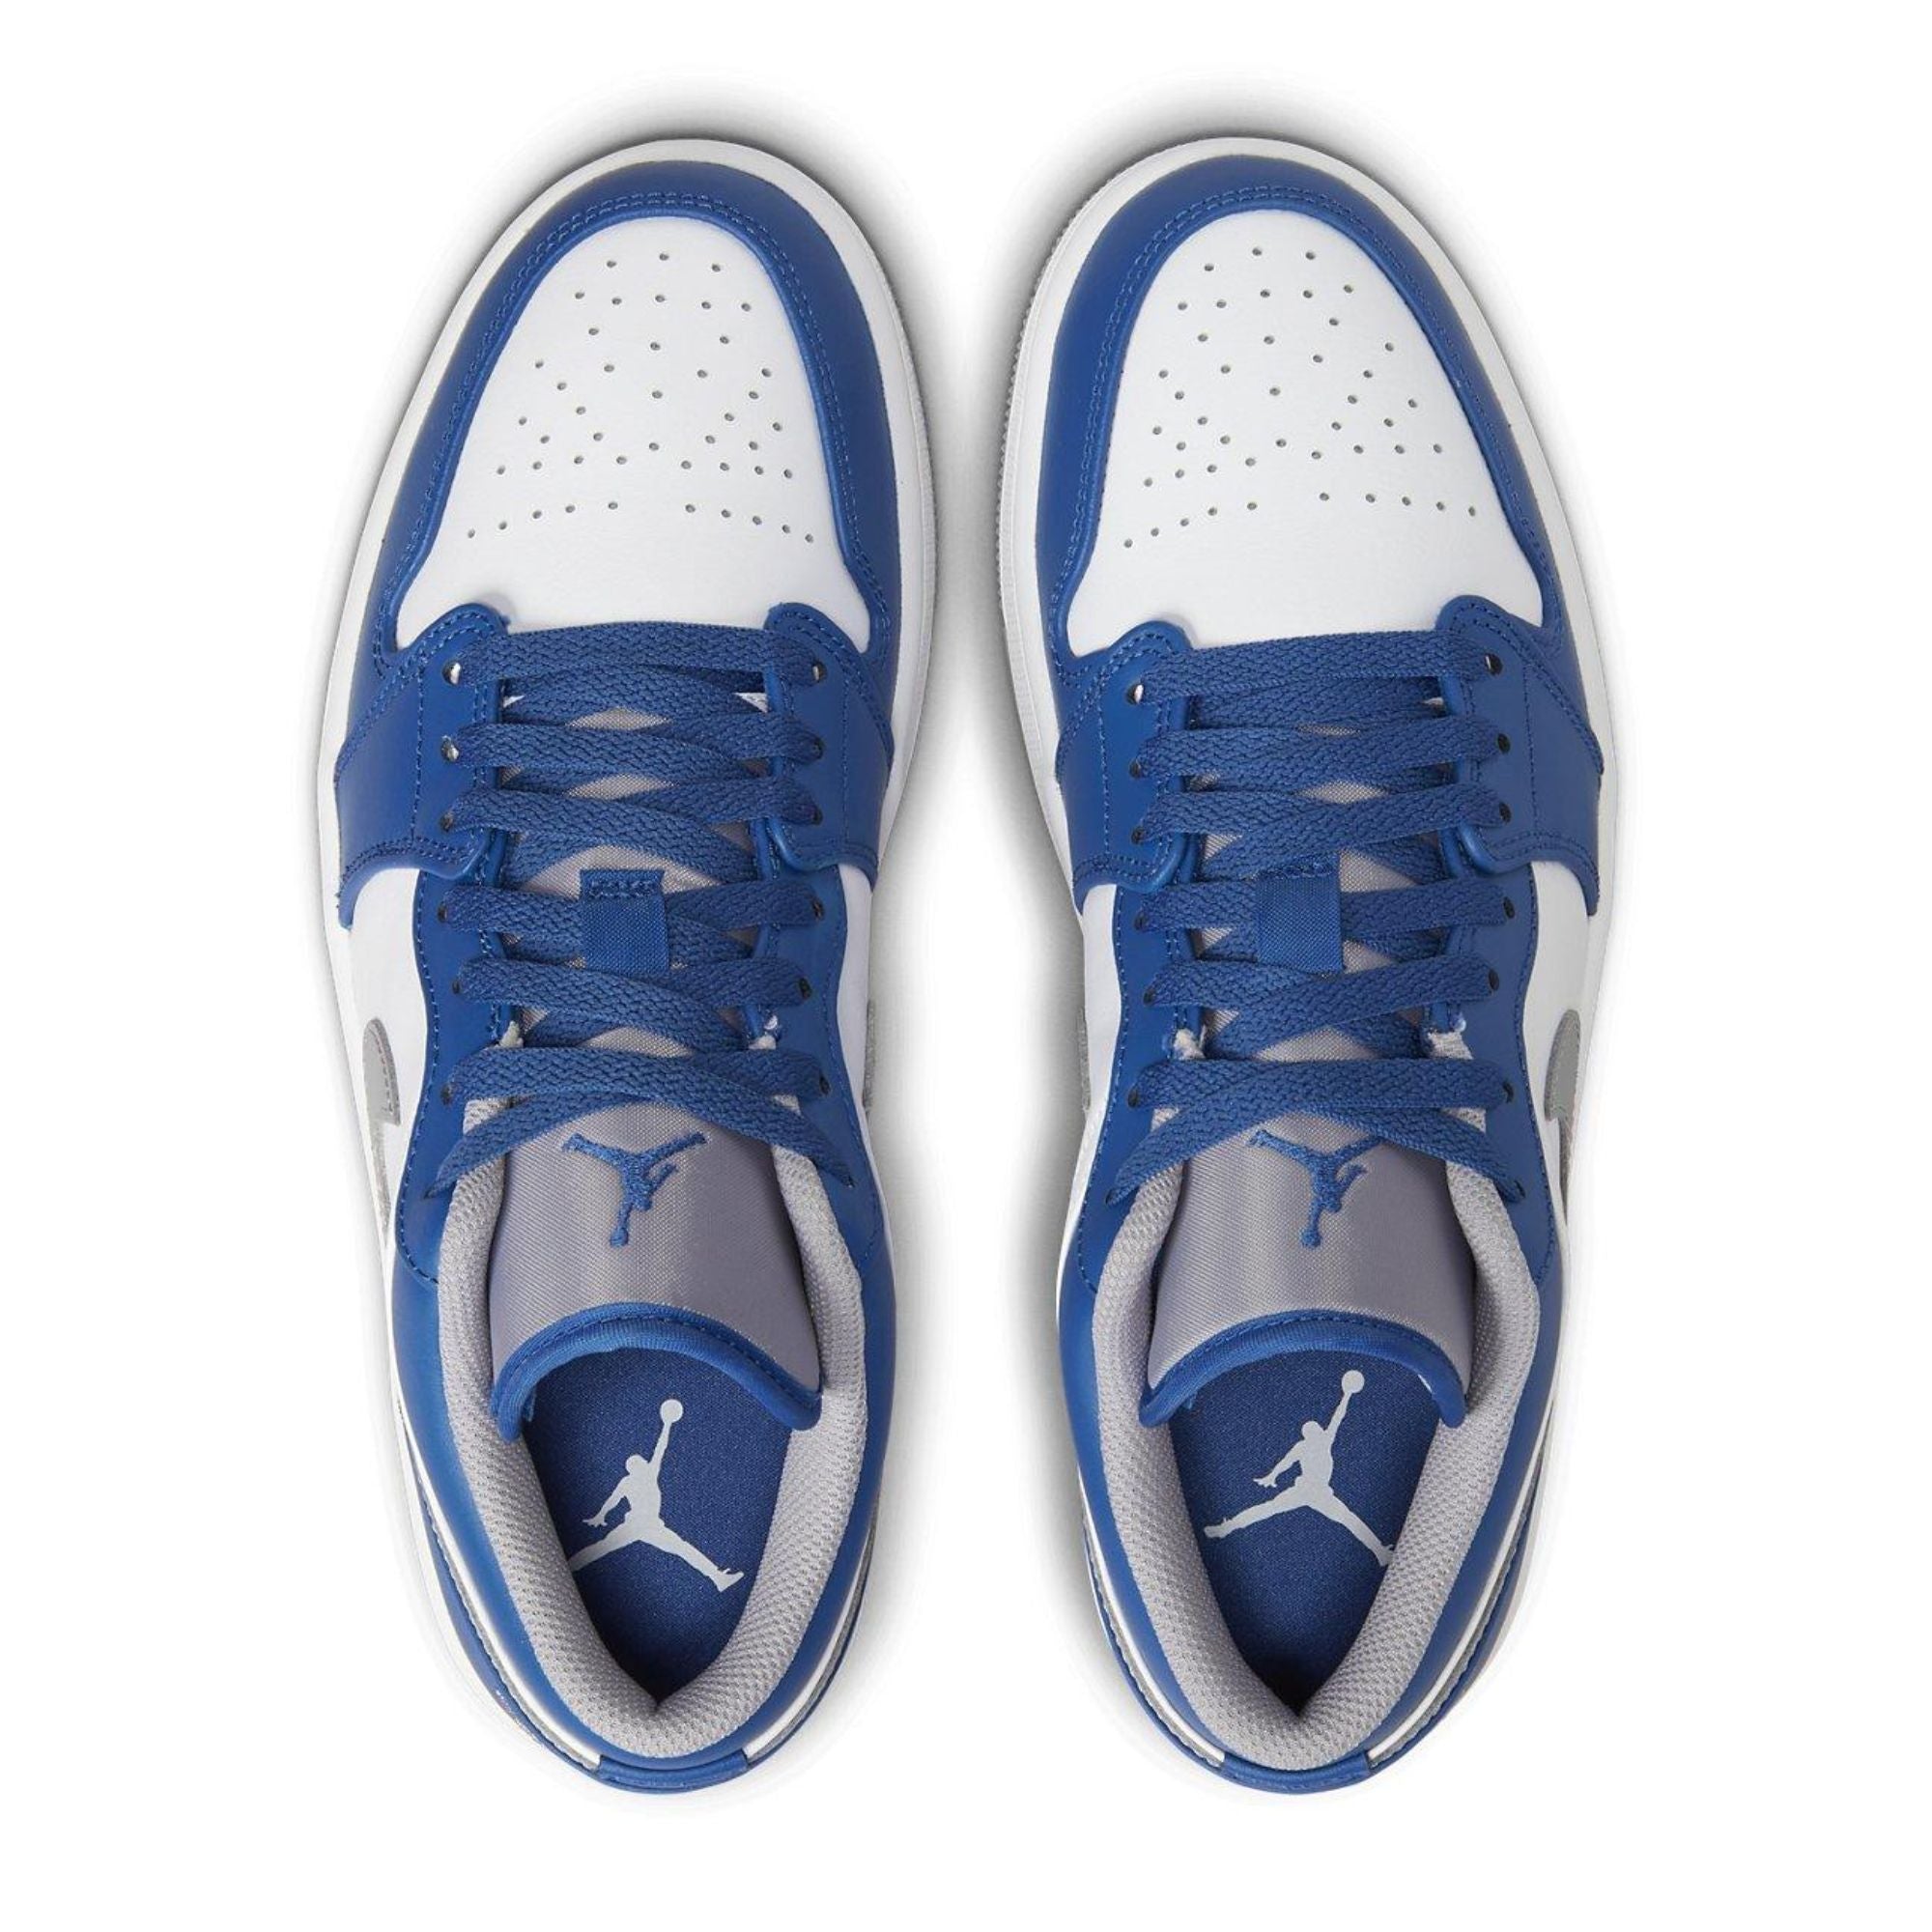 Air Jordan 1 Low ’True Blue’ Sneakers